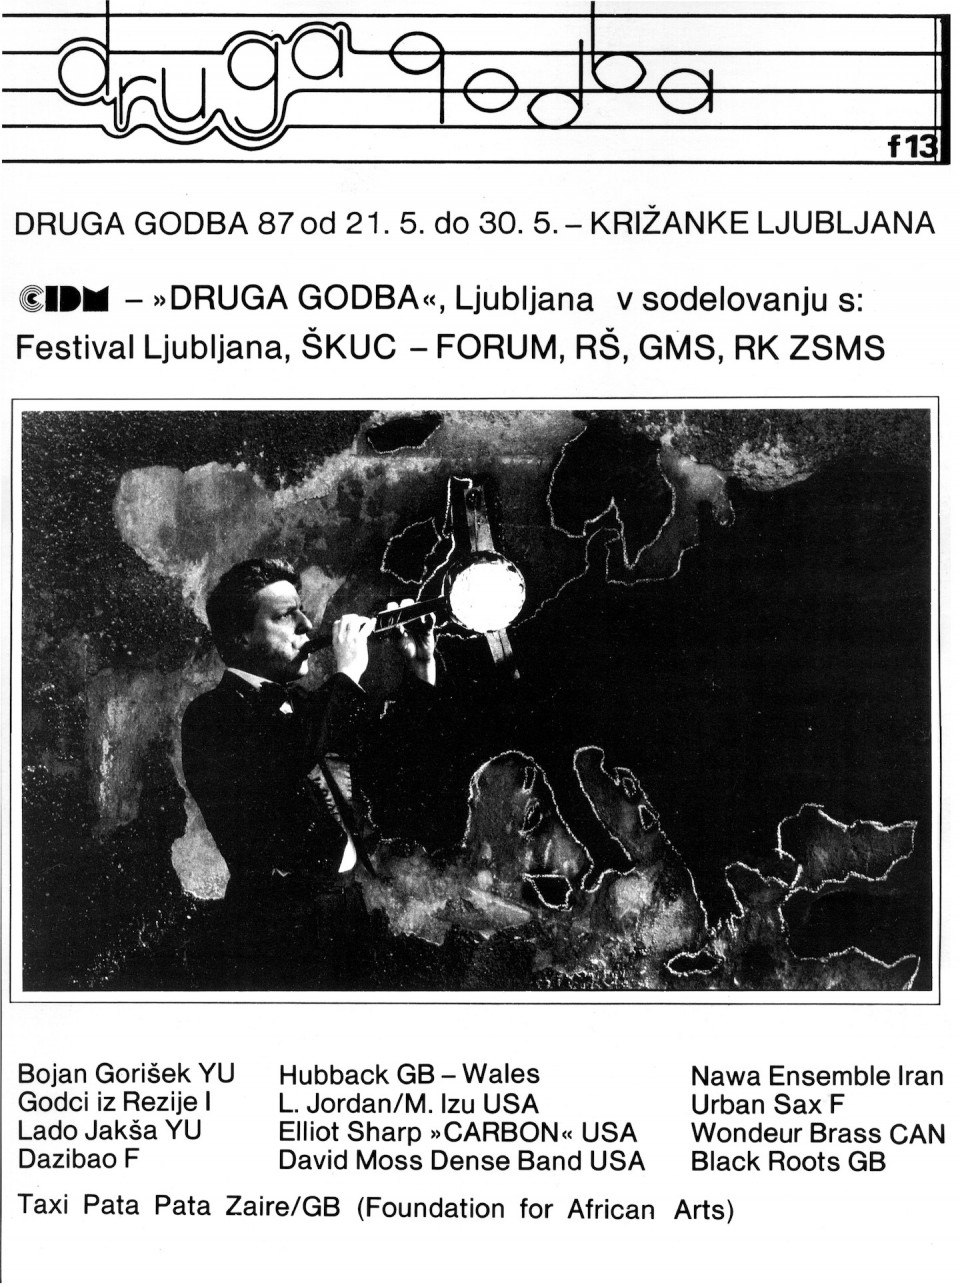 Page couverture du programme du festival Druga Godba